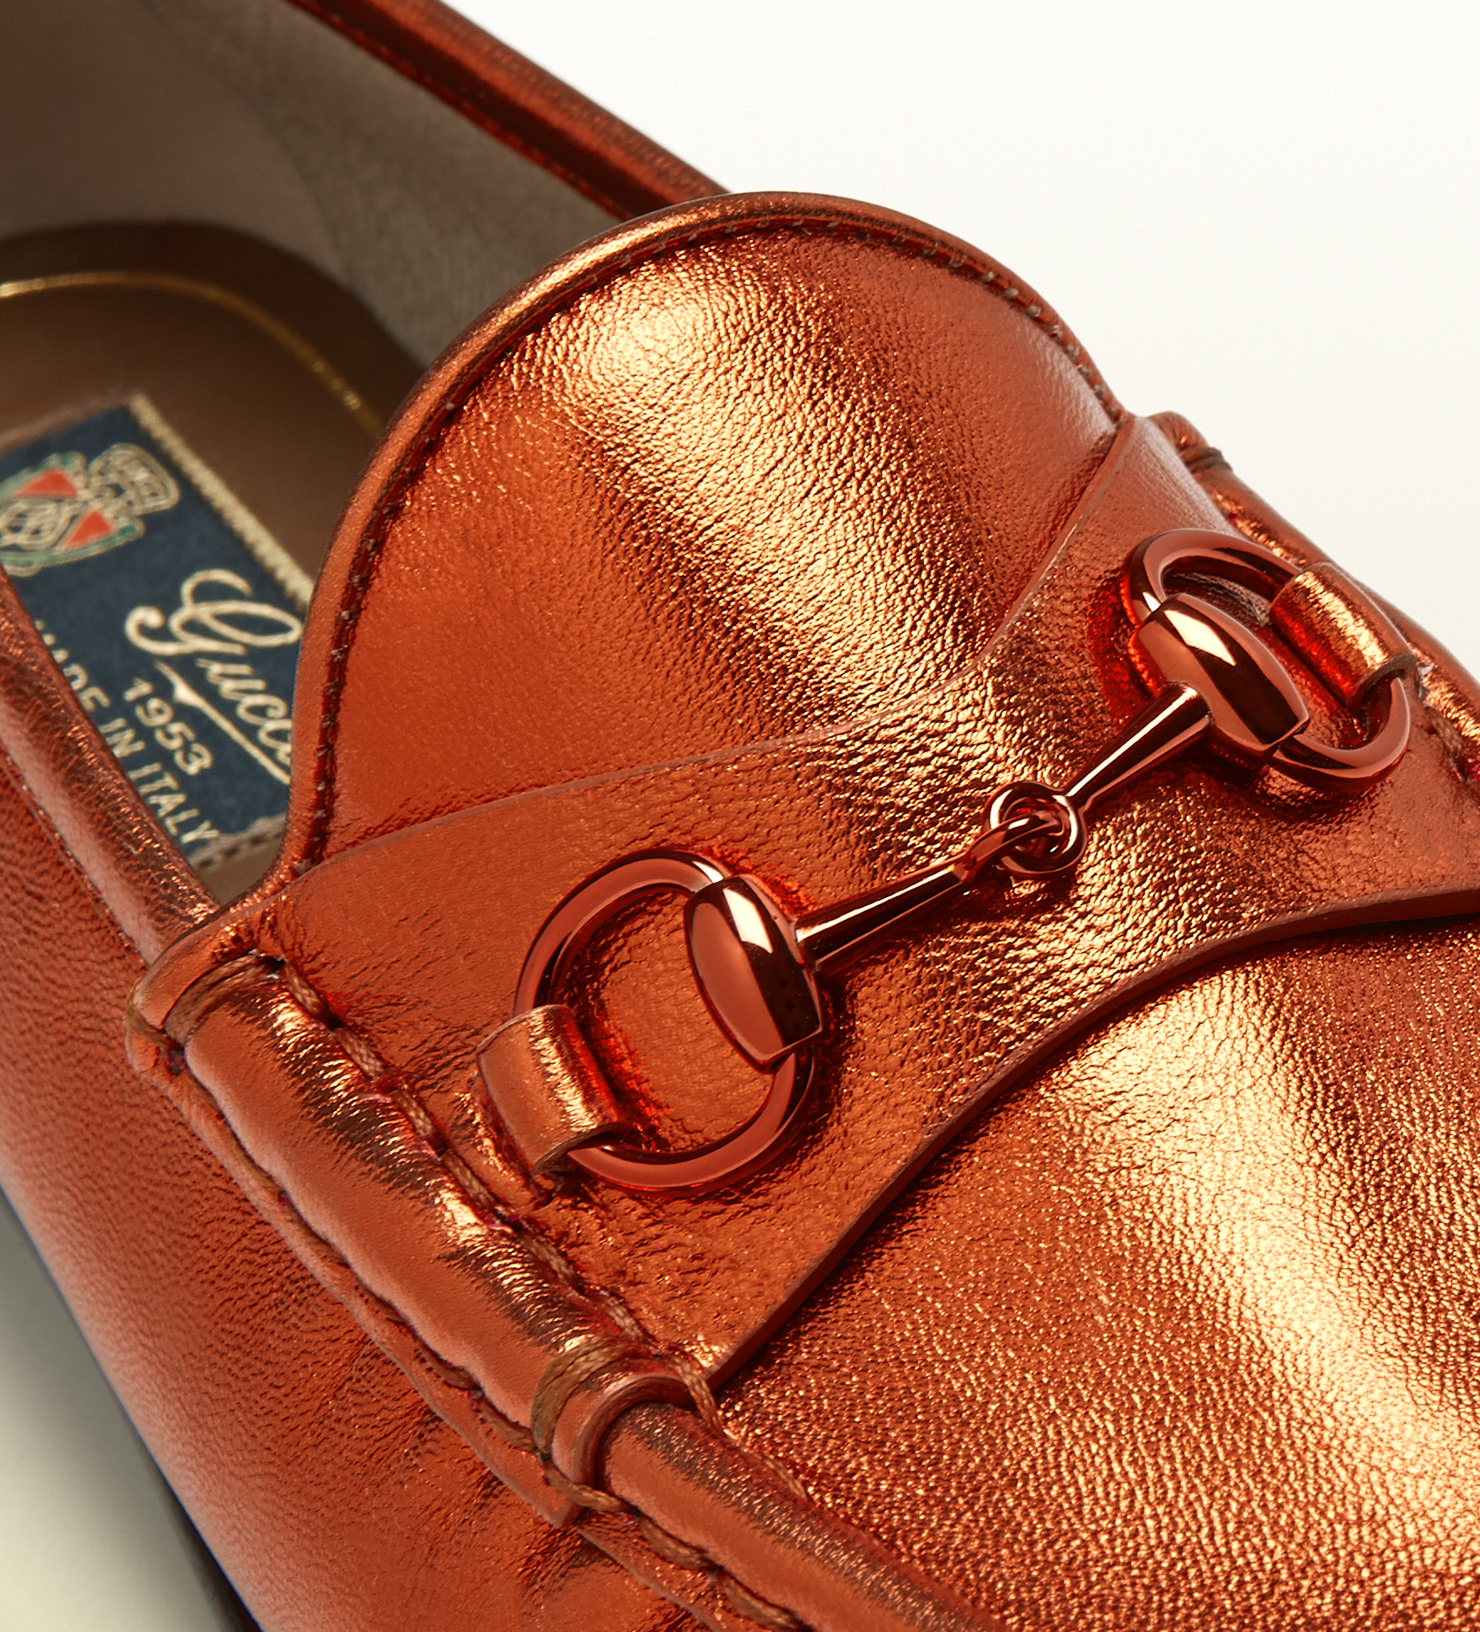 Gucci Horsebit Loafer in Metallic Leather in Orange for Men - Lyst